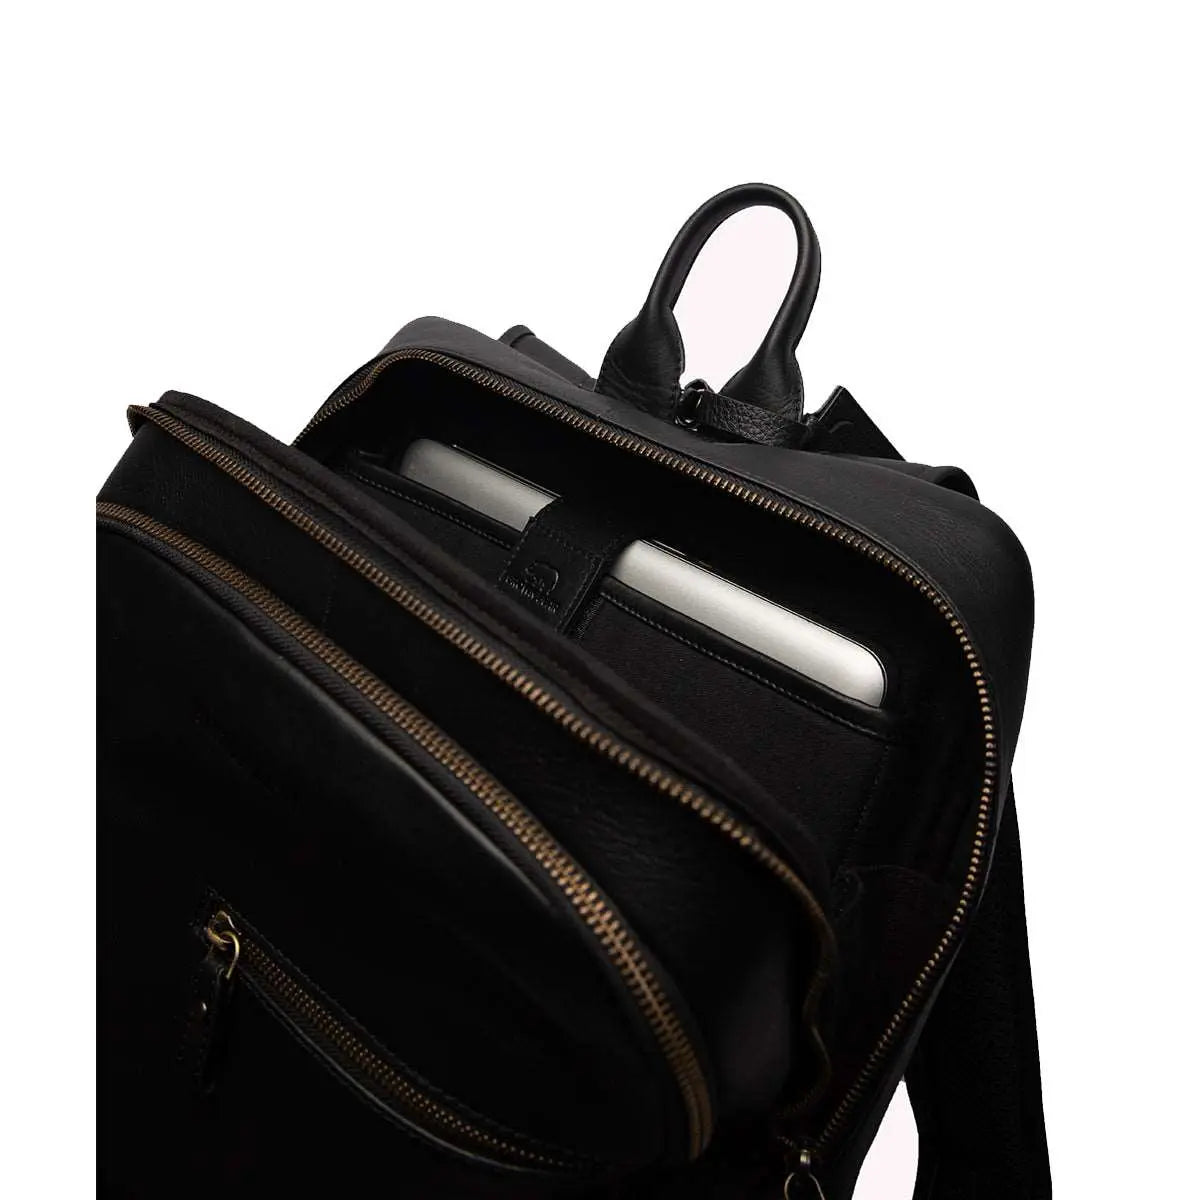 Samsonite Classic Business Leather Slim Backpack